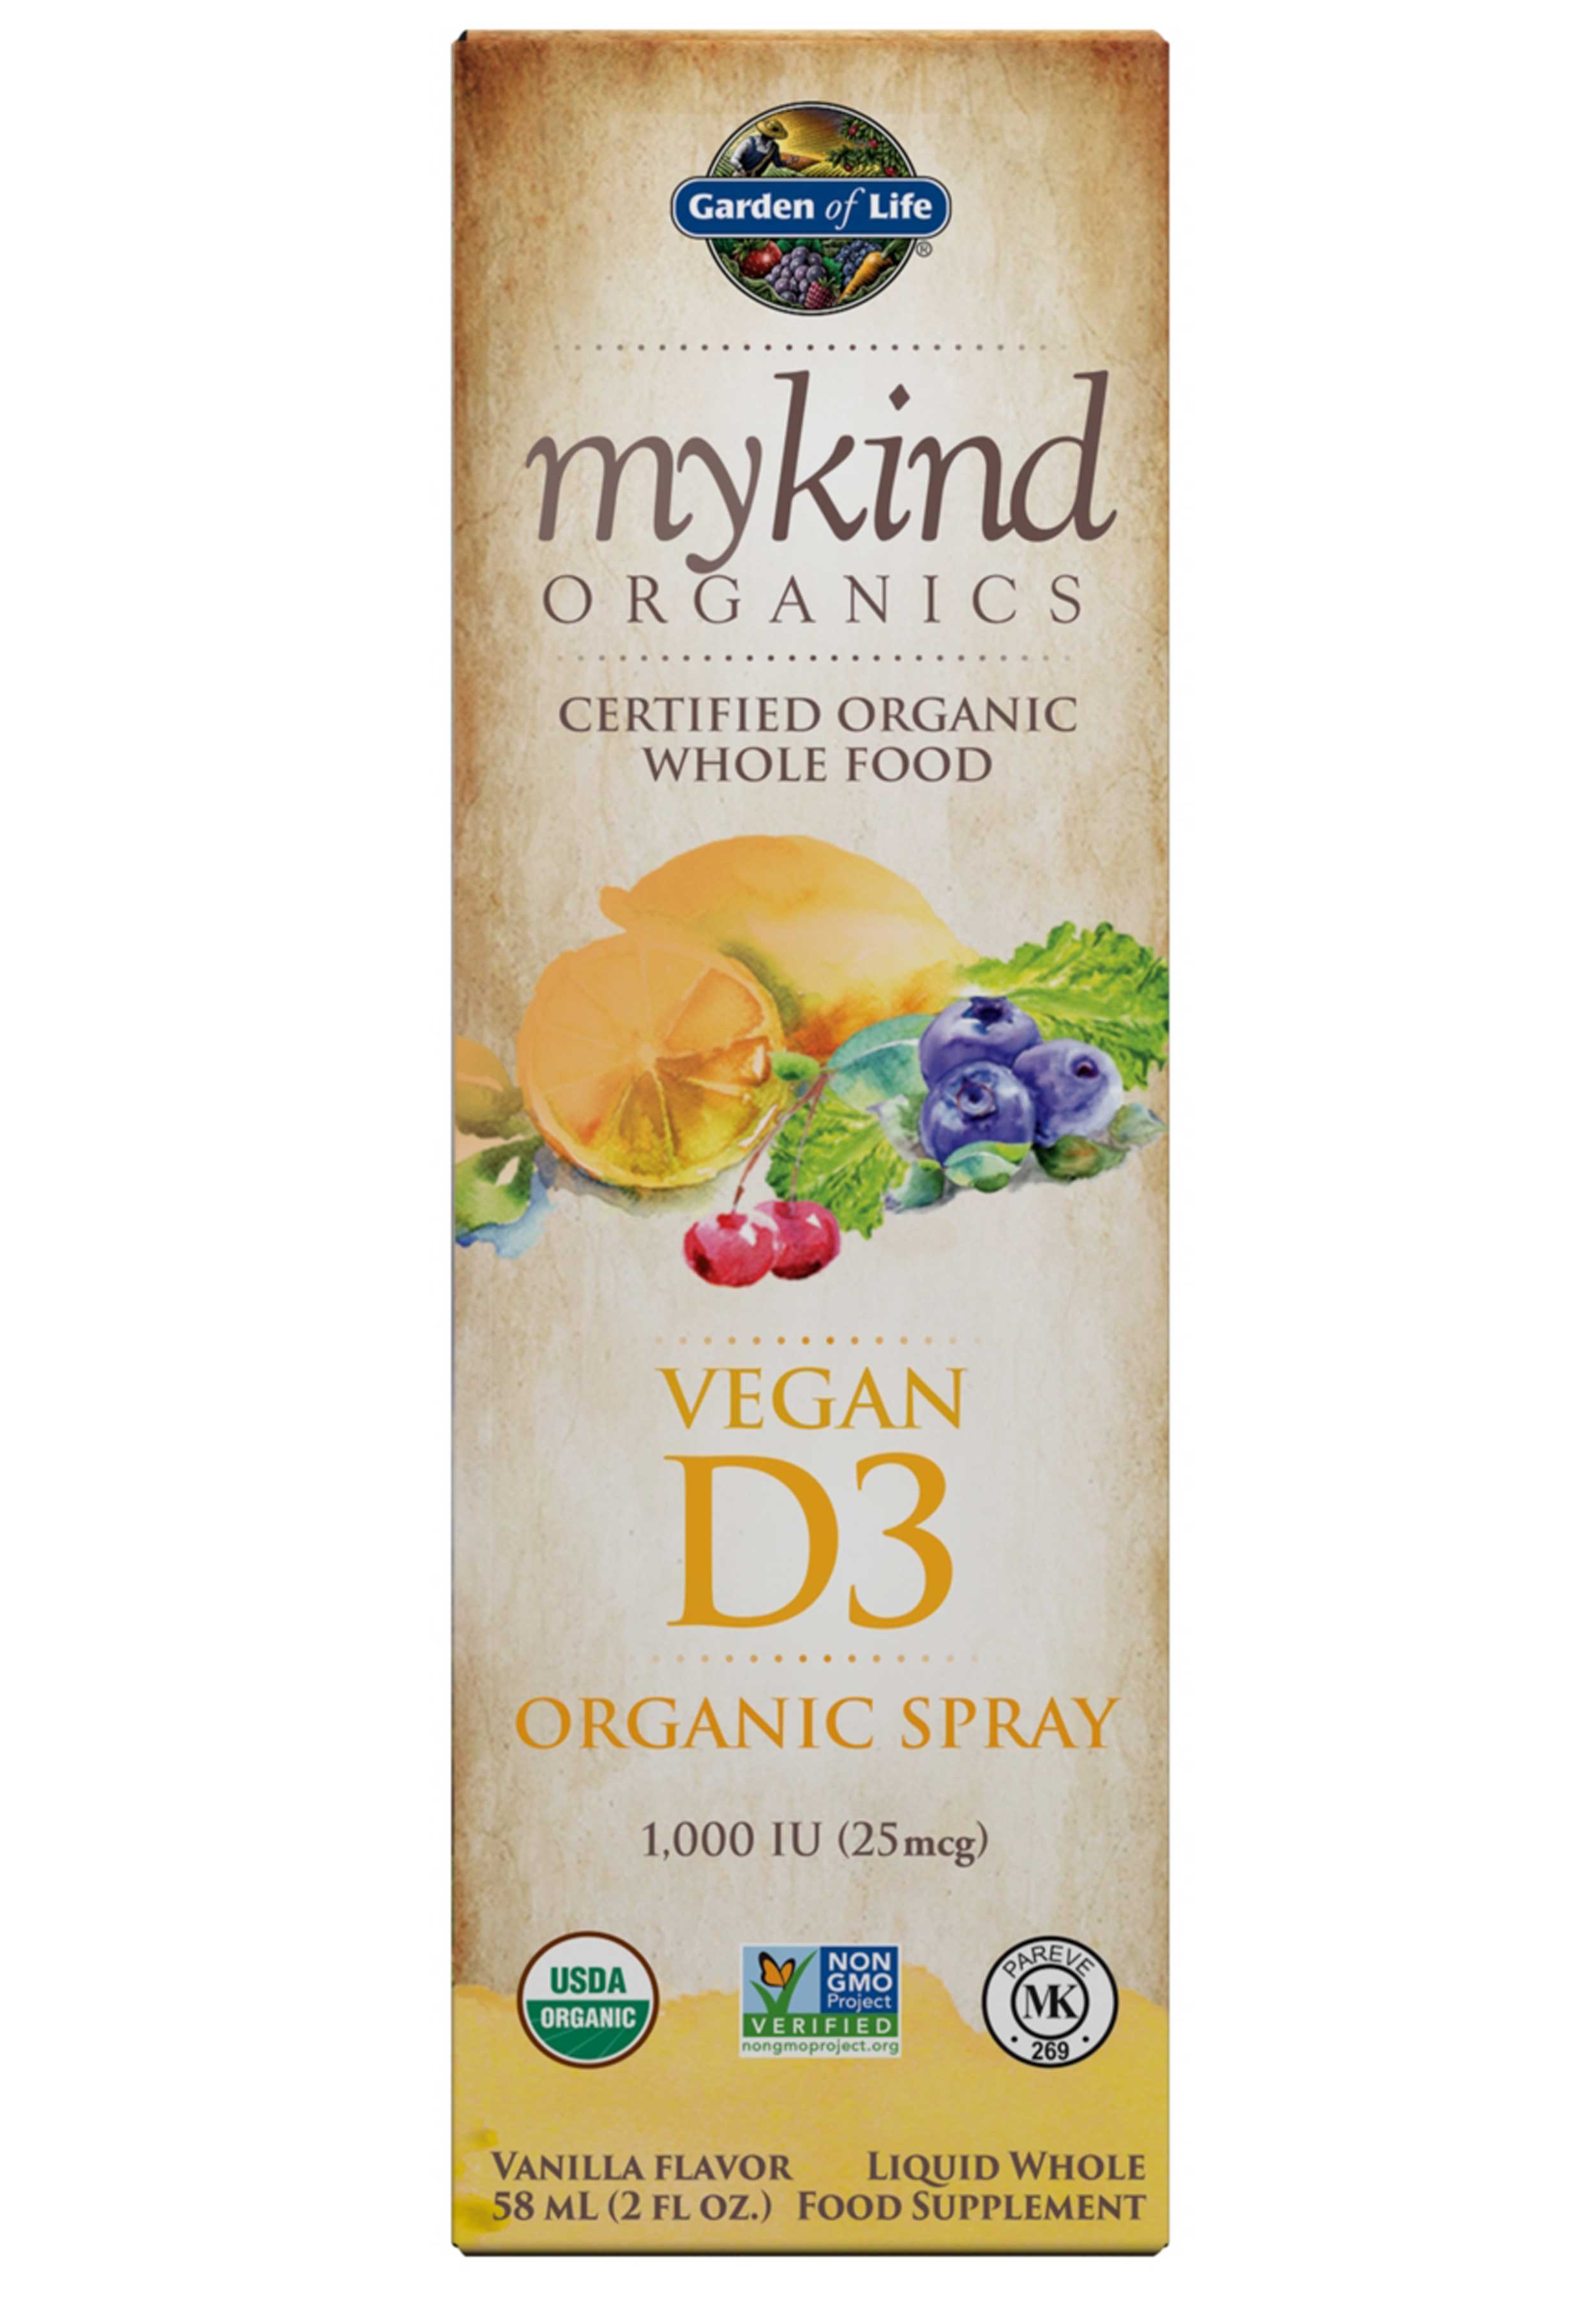 Garden of Life mykind Organics Vegan Vitamin D3 Spray